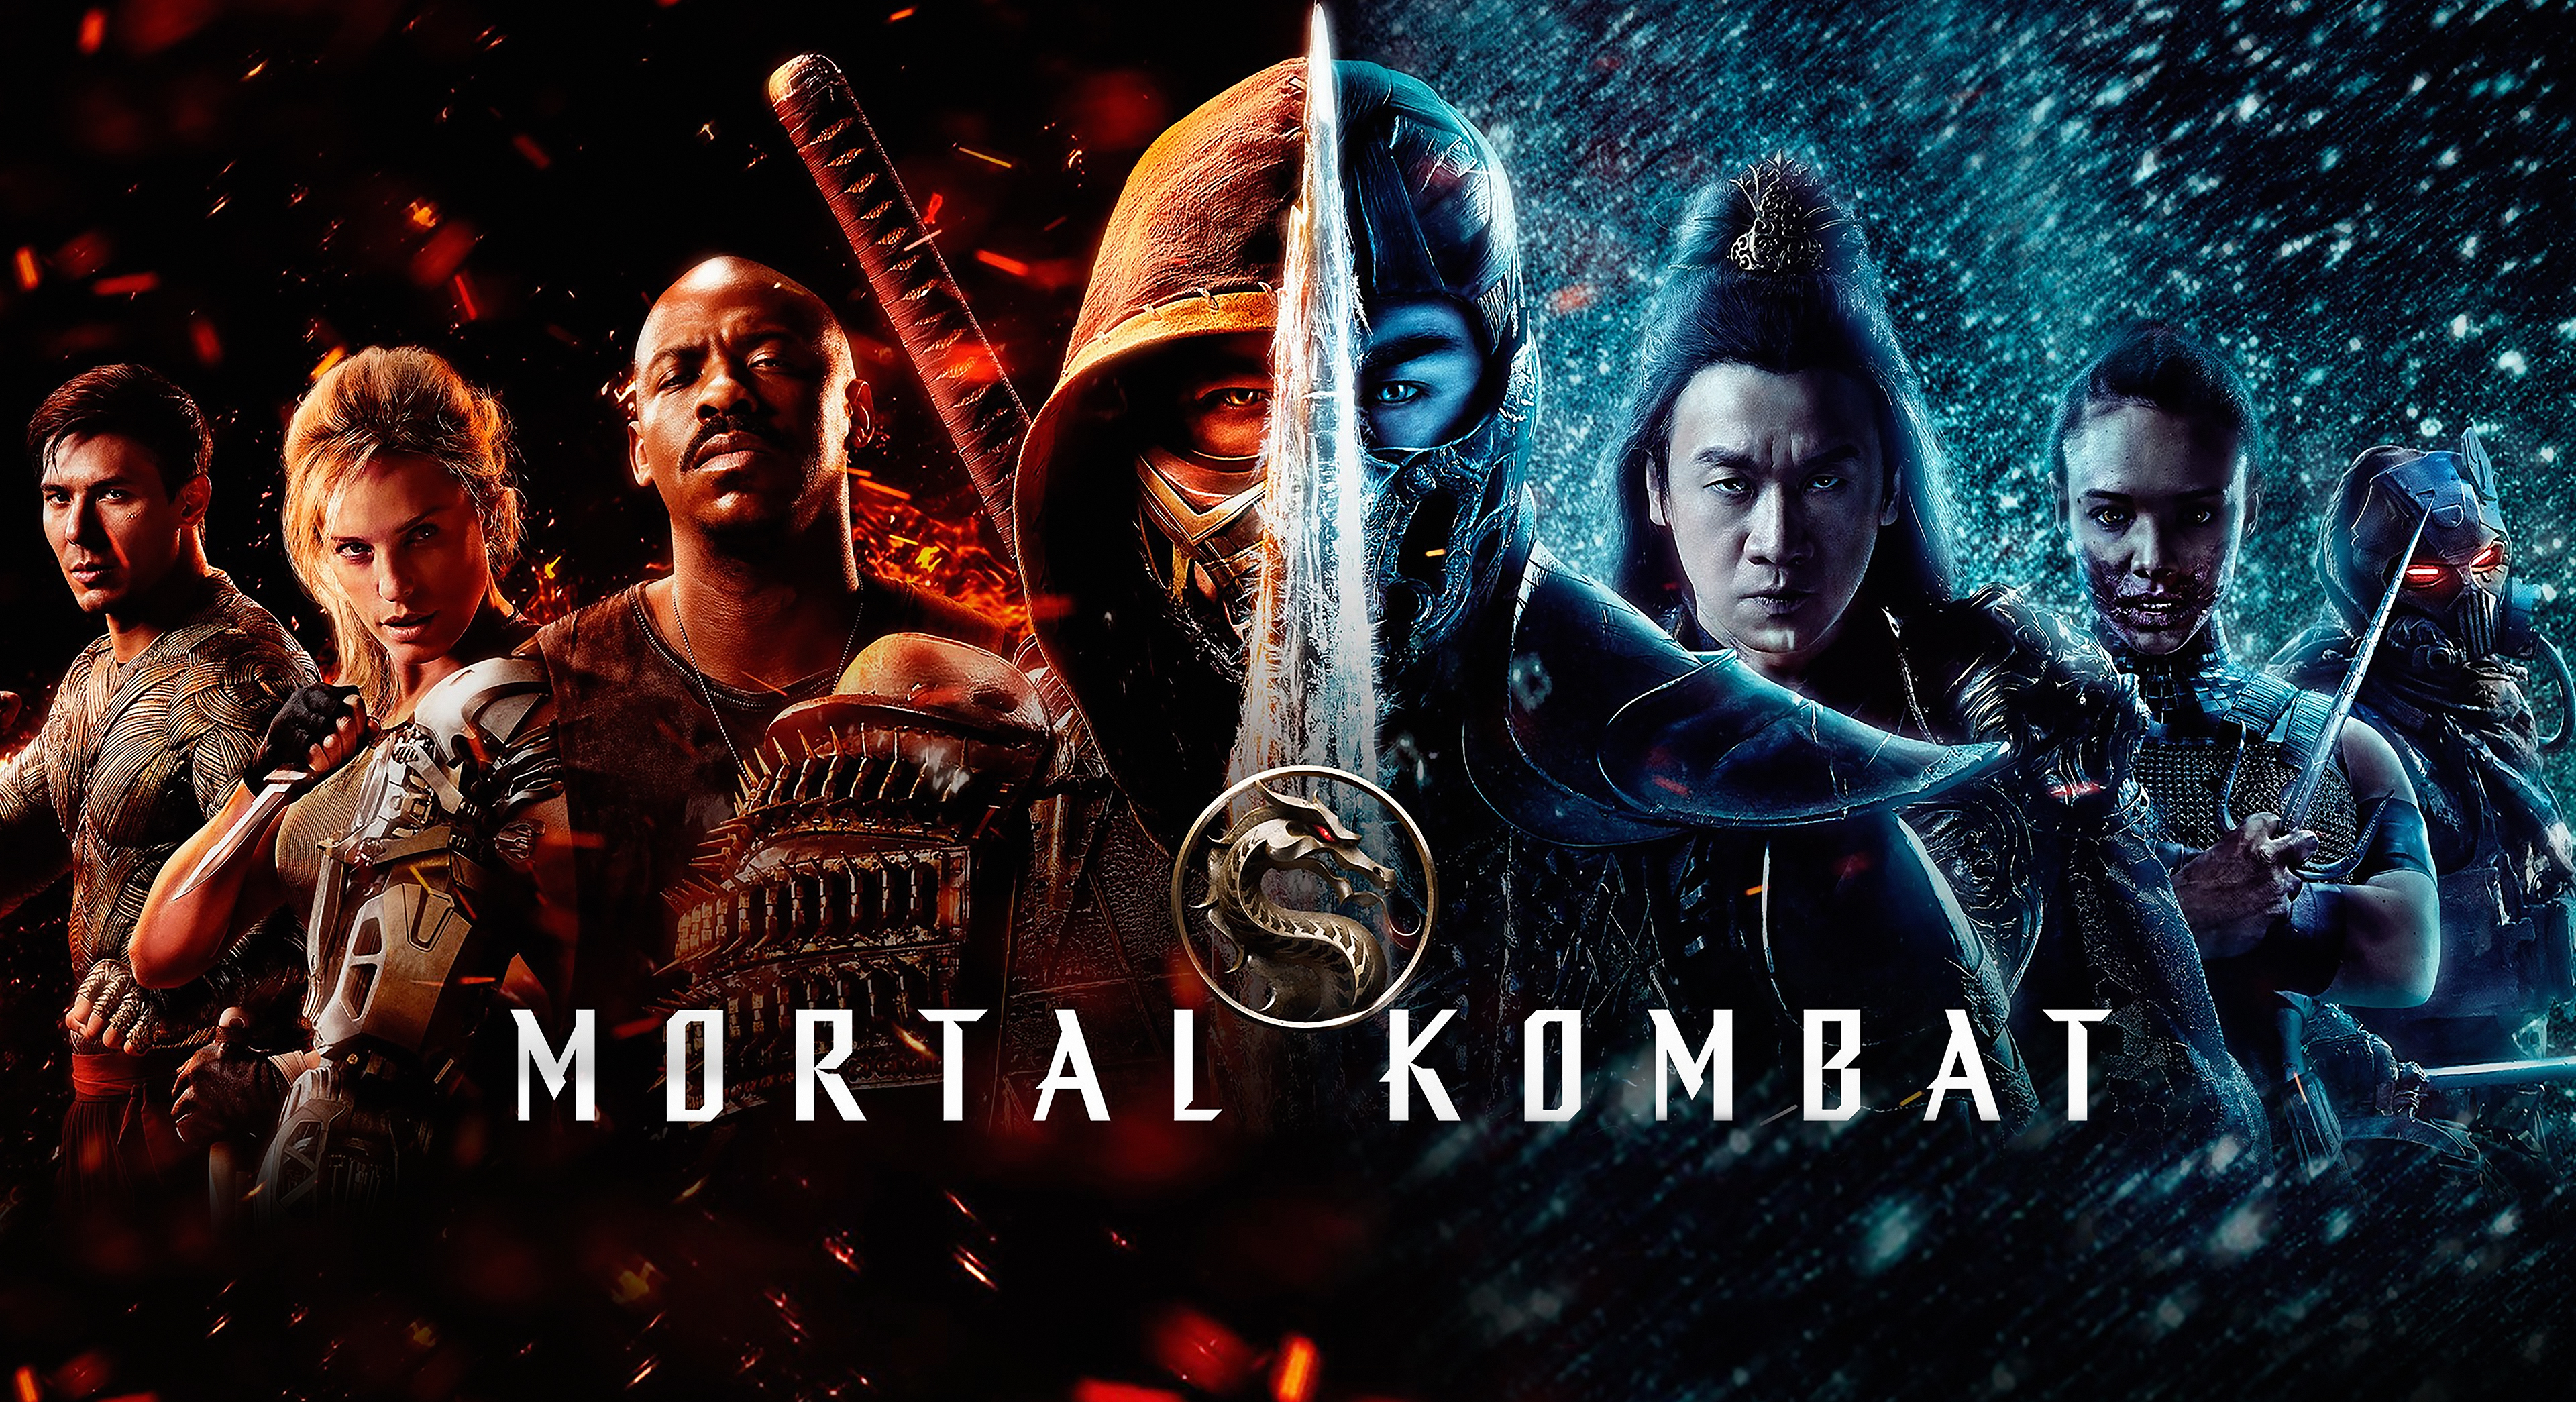 Mortal Kombat Mortal Kombat 10 Mortal Kombat 11 Mortal Kombat Vs DC Universe Movie Poster Movie Char 3840x2090